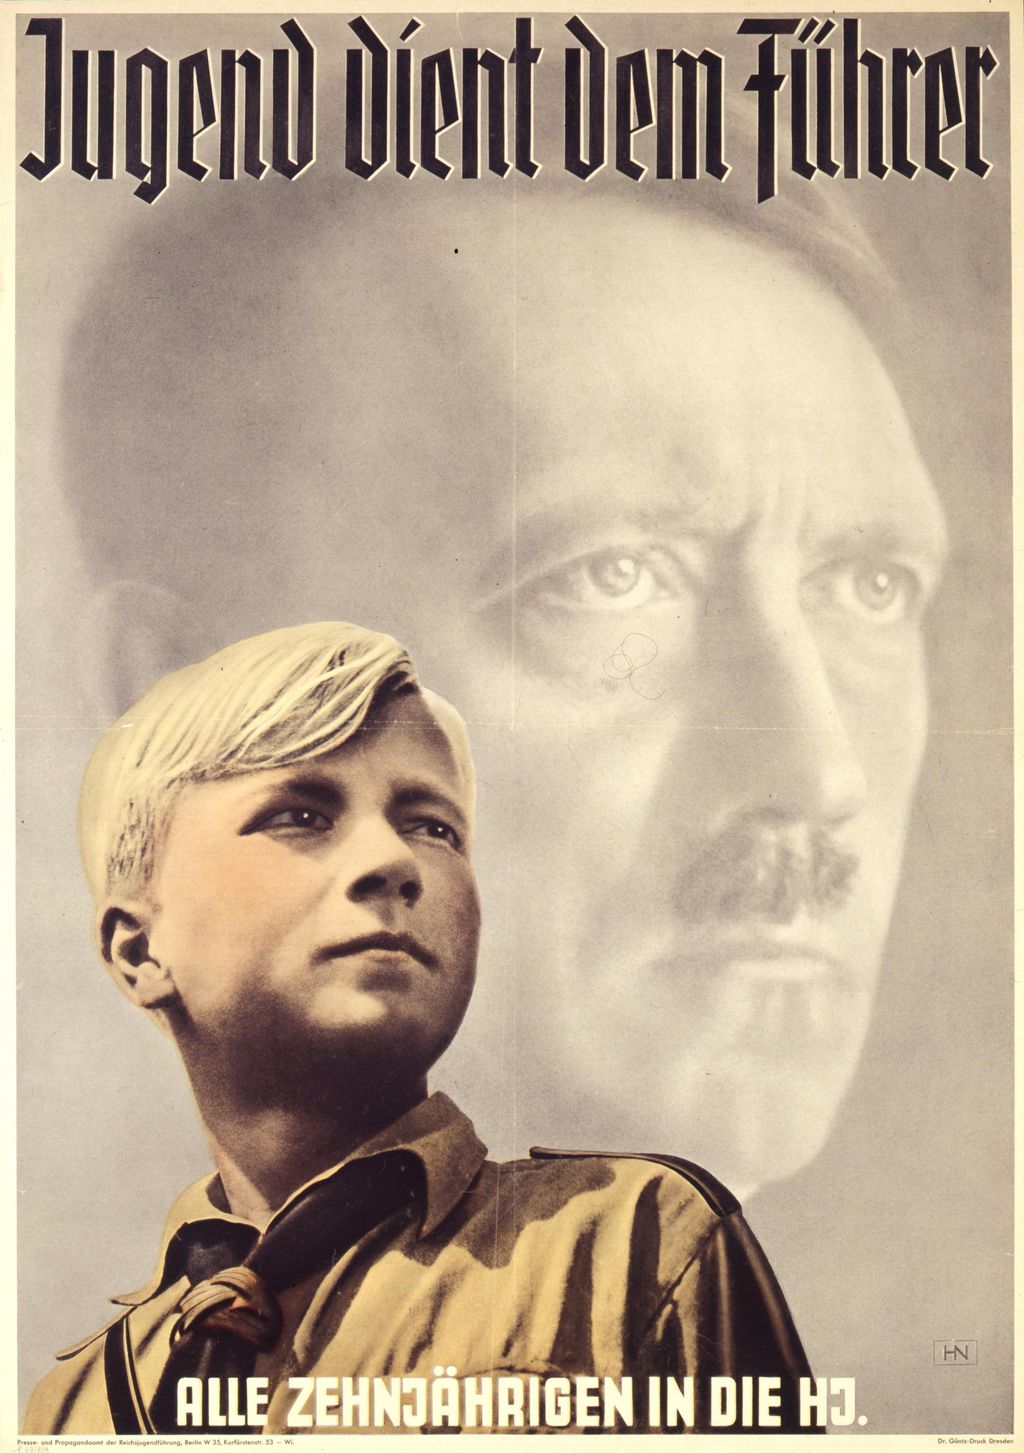 Exponat: Plakat: Neuner, Hein "Jugend dient dem Führer", um 1939